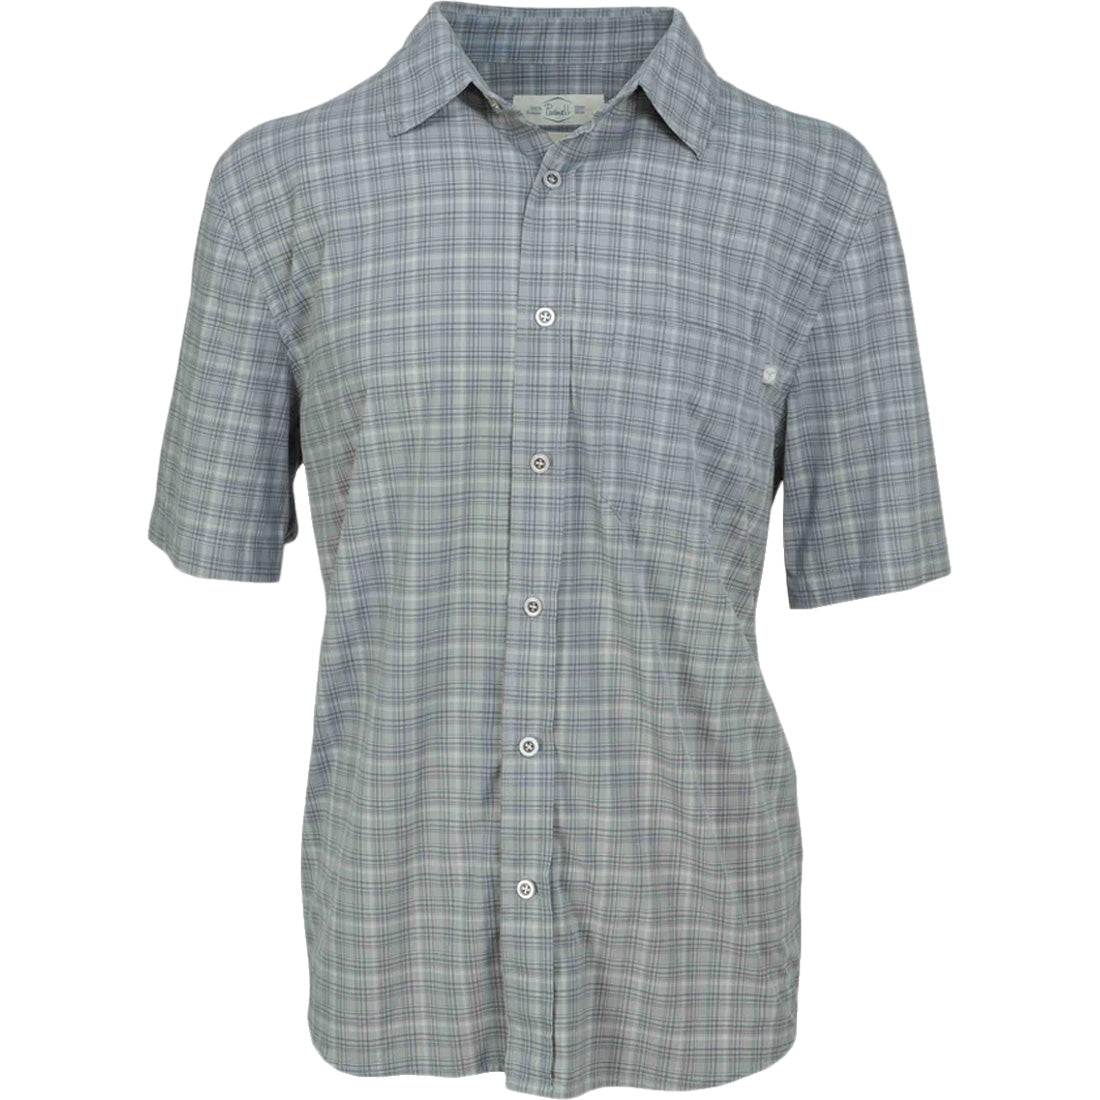 Purnell Short Sleeve Quick-Dry Shirt - Men's